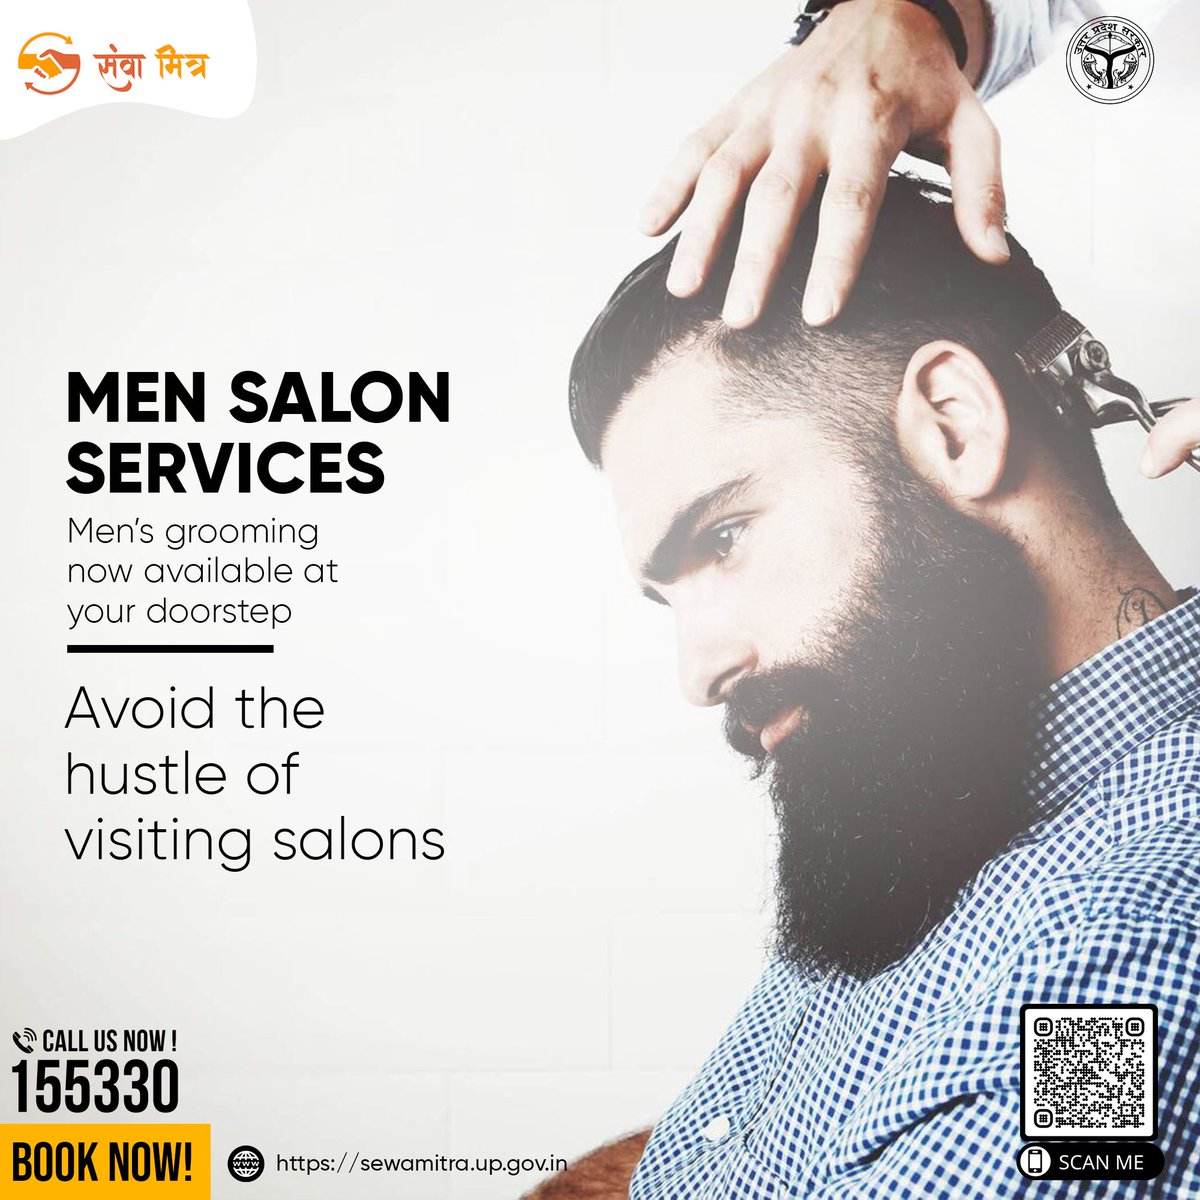 CALL AT 155330 FOR MEN SALON SERVICES #mensalon #haircut #salon #hairstyles #menshair #hairstyle #beauty #menmassage #mensgrooming #beard #grooming #menfashion #menshaircuts #hairsystem #dubai #ShubhmanGill #personalcare #ViratKohli #hairreplacementspecialist #COVLUT #mensproduct